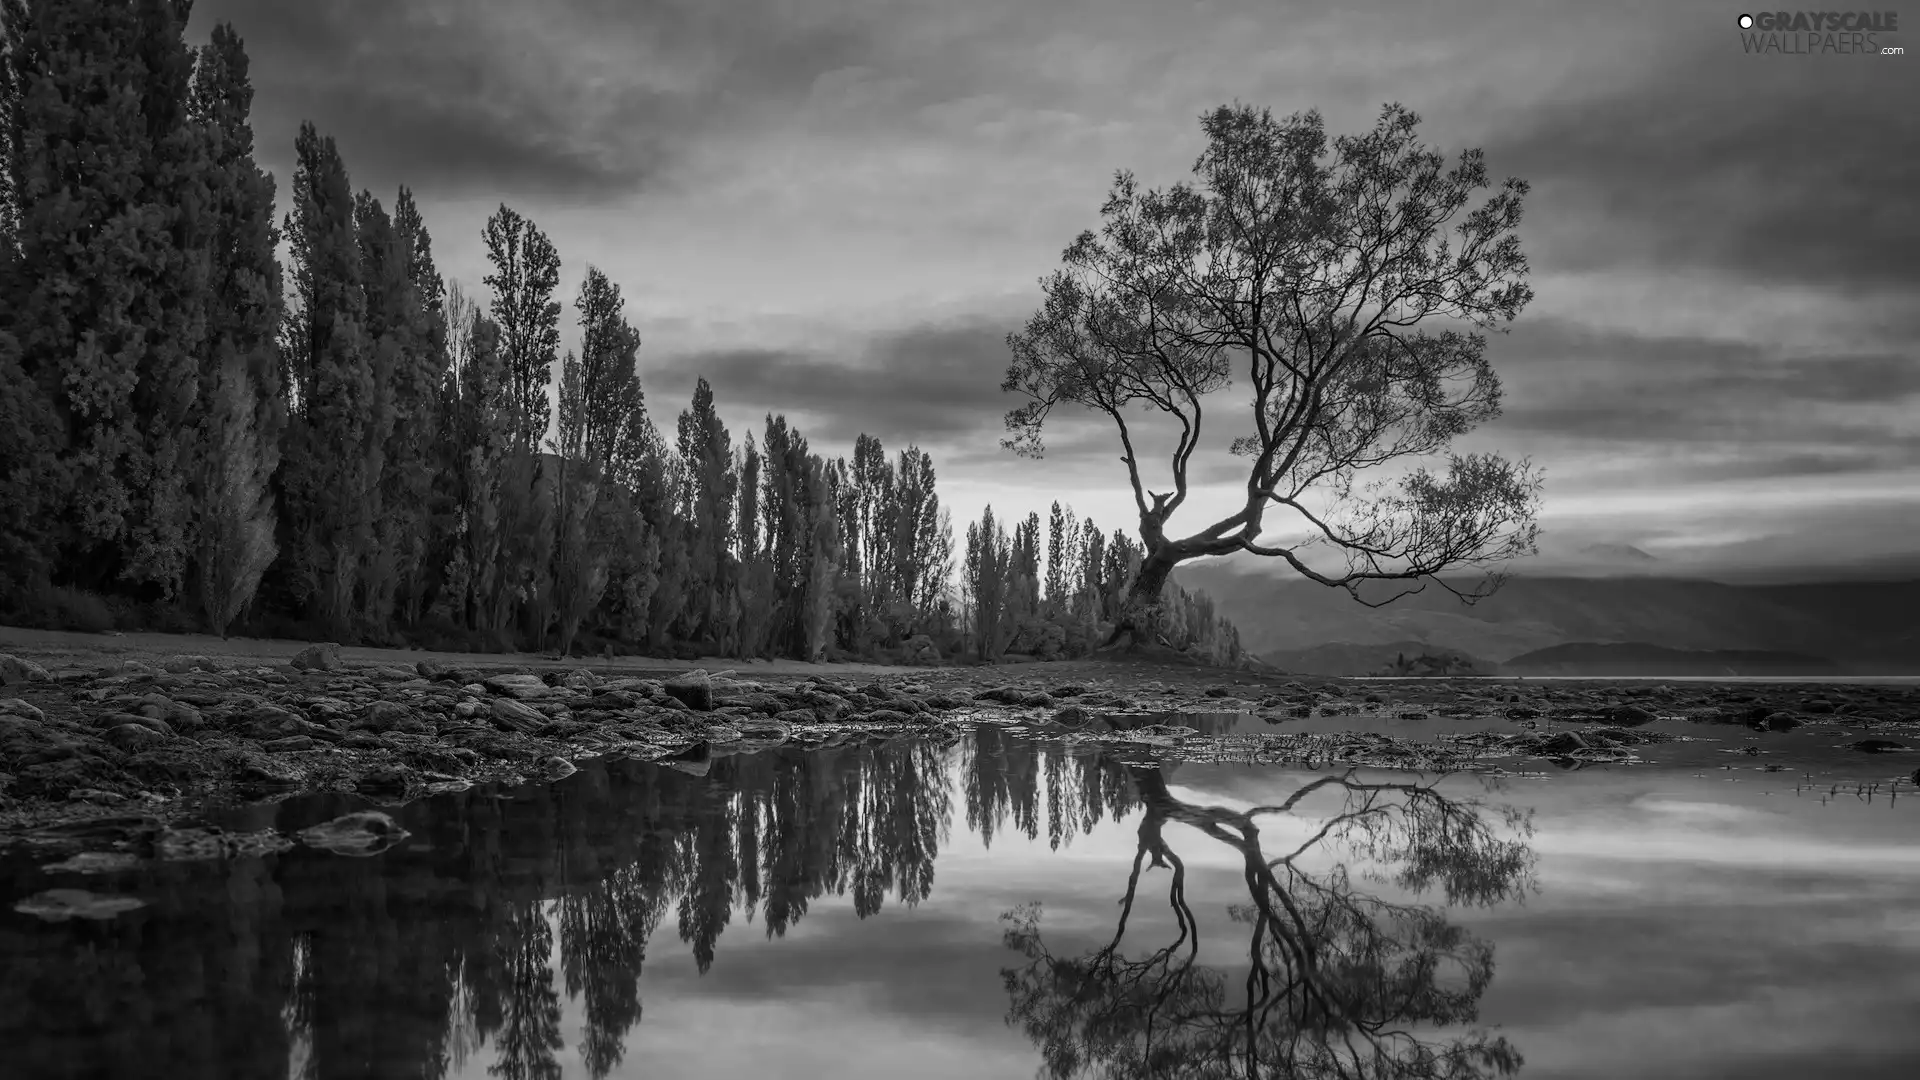 autumn, trees, reflection, Mountains, Wanaka Lake, clouds, New Zeland